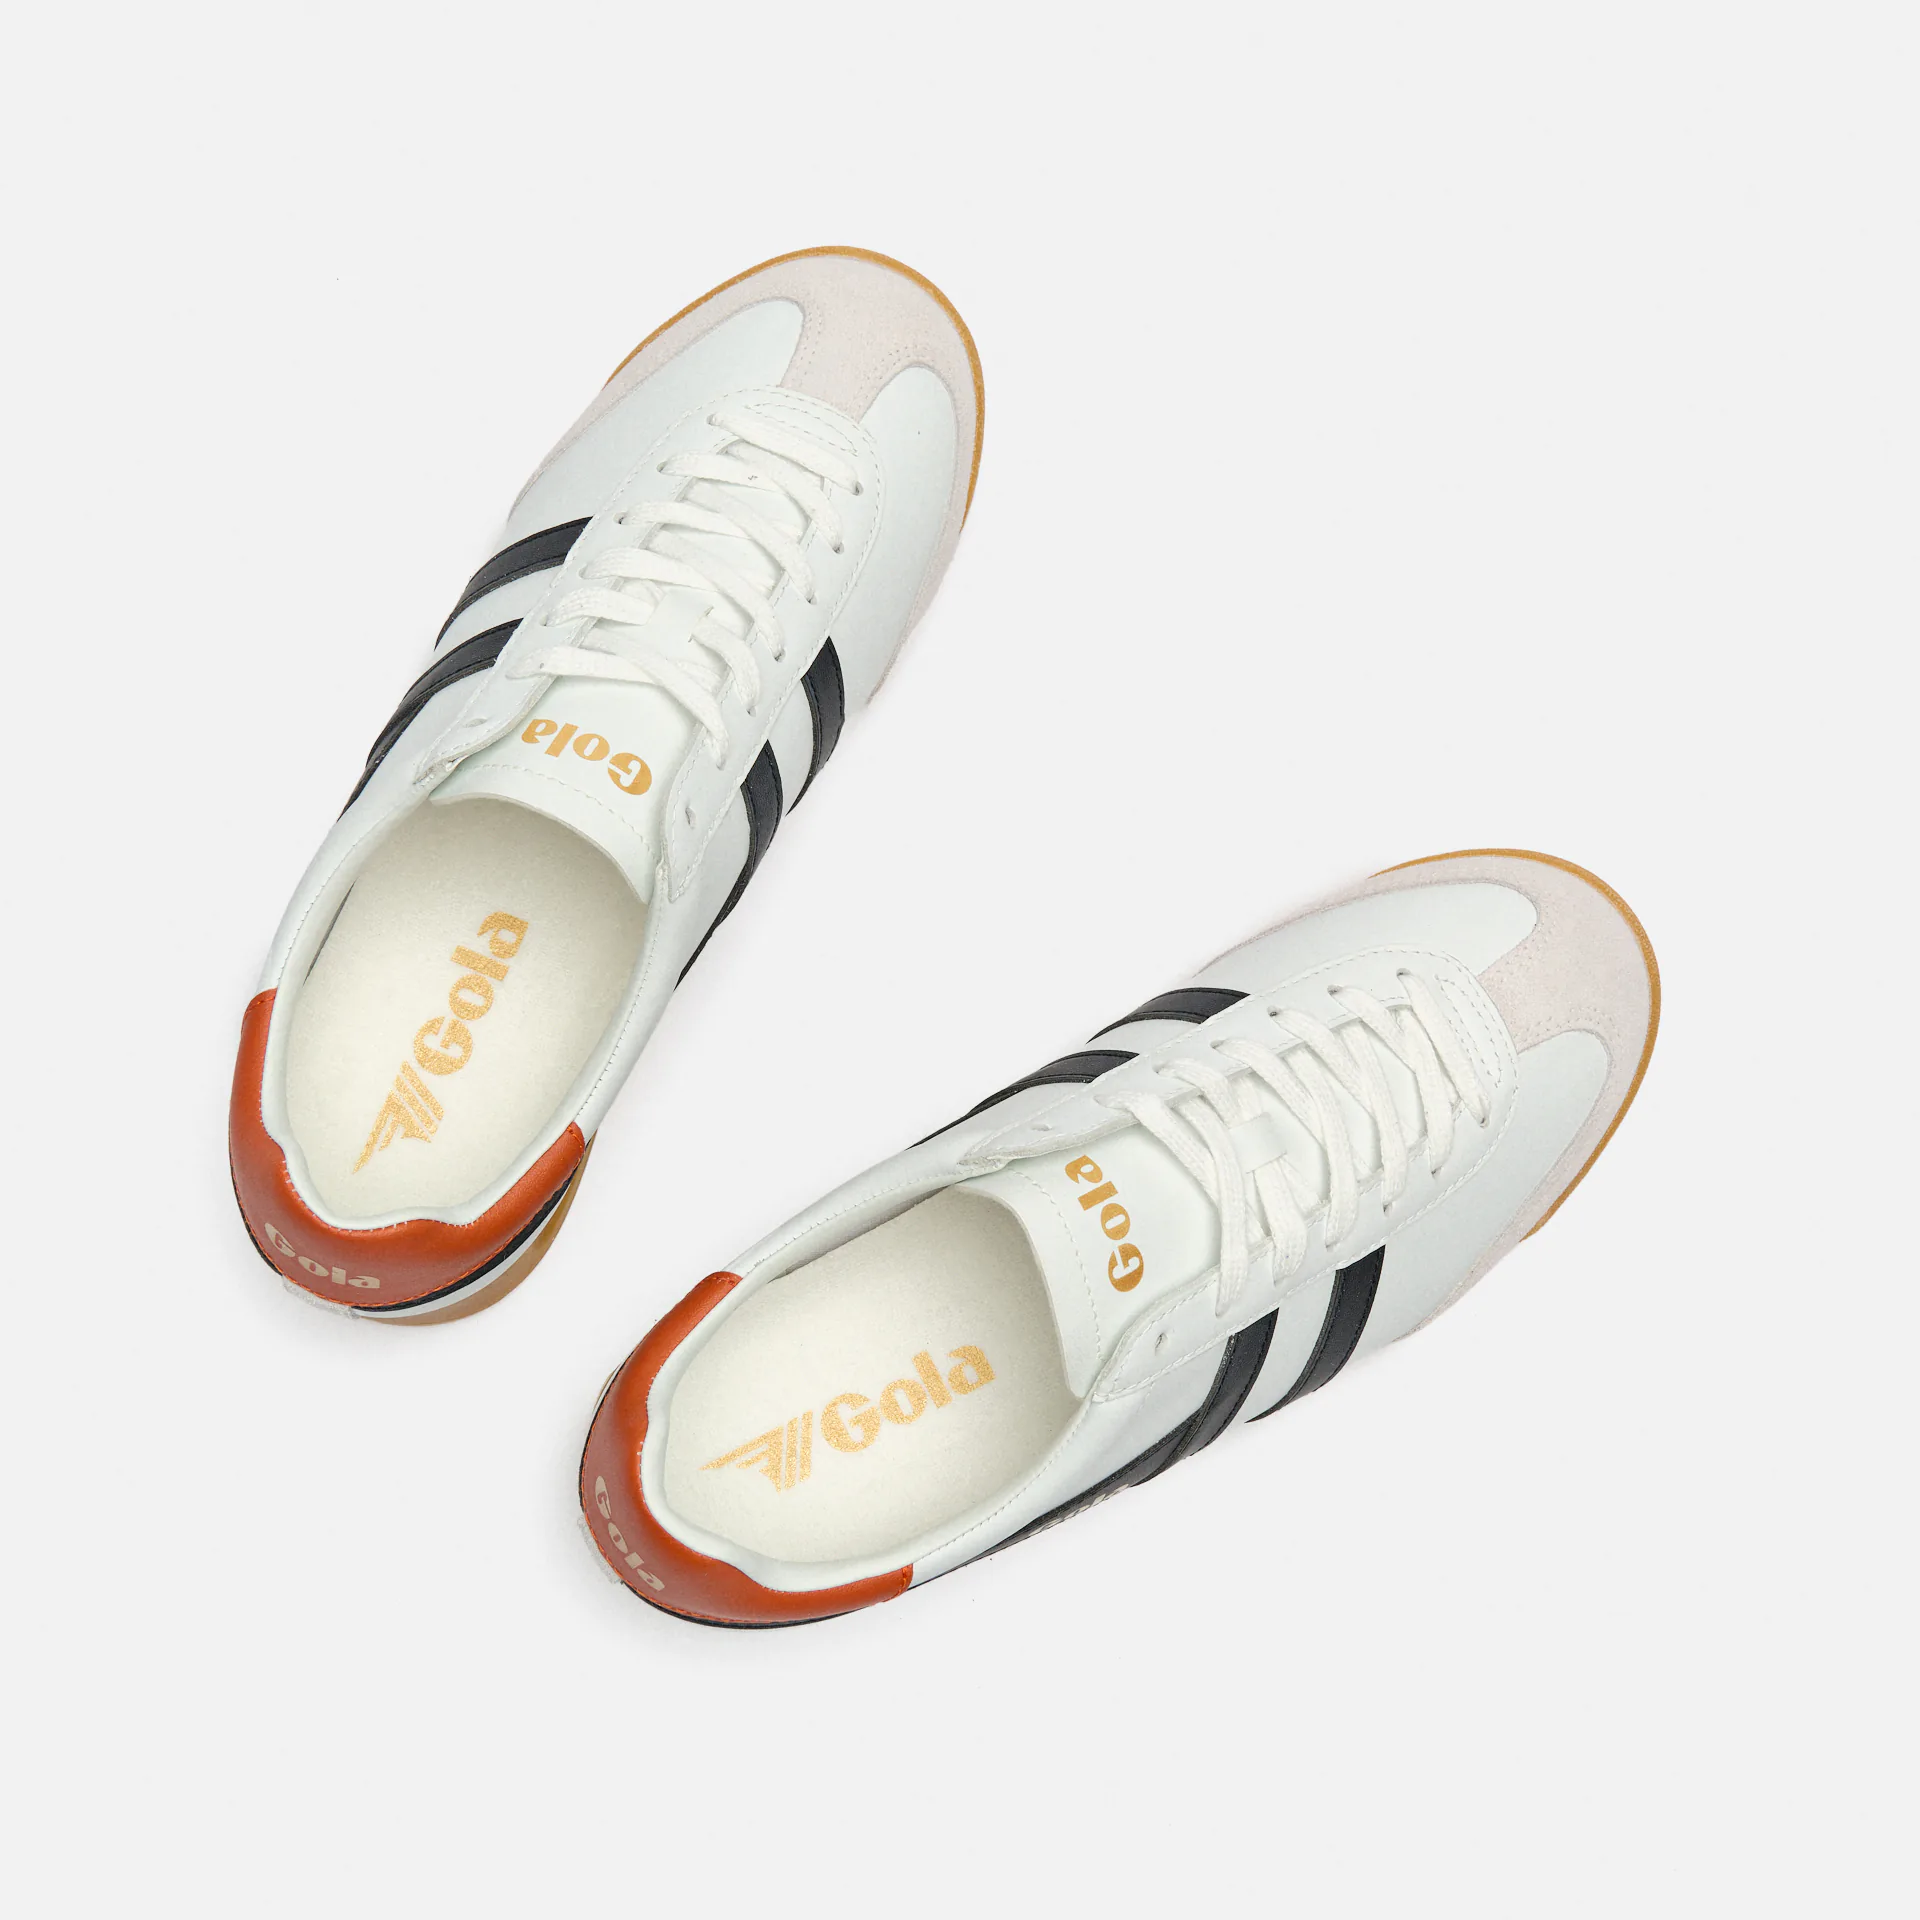 Gola Torpedo Leather Sneaker White/Black/Moody Orange